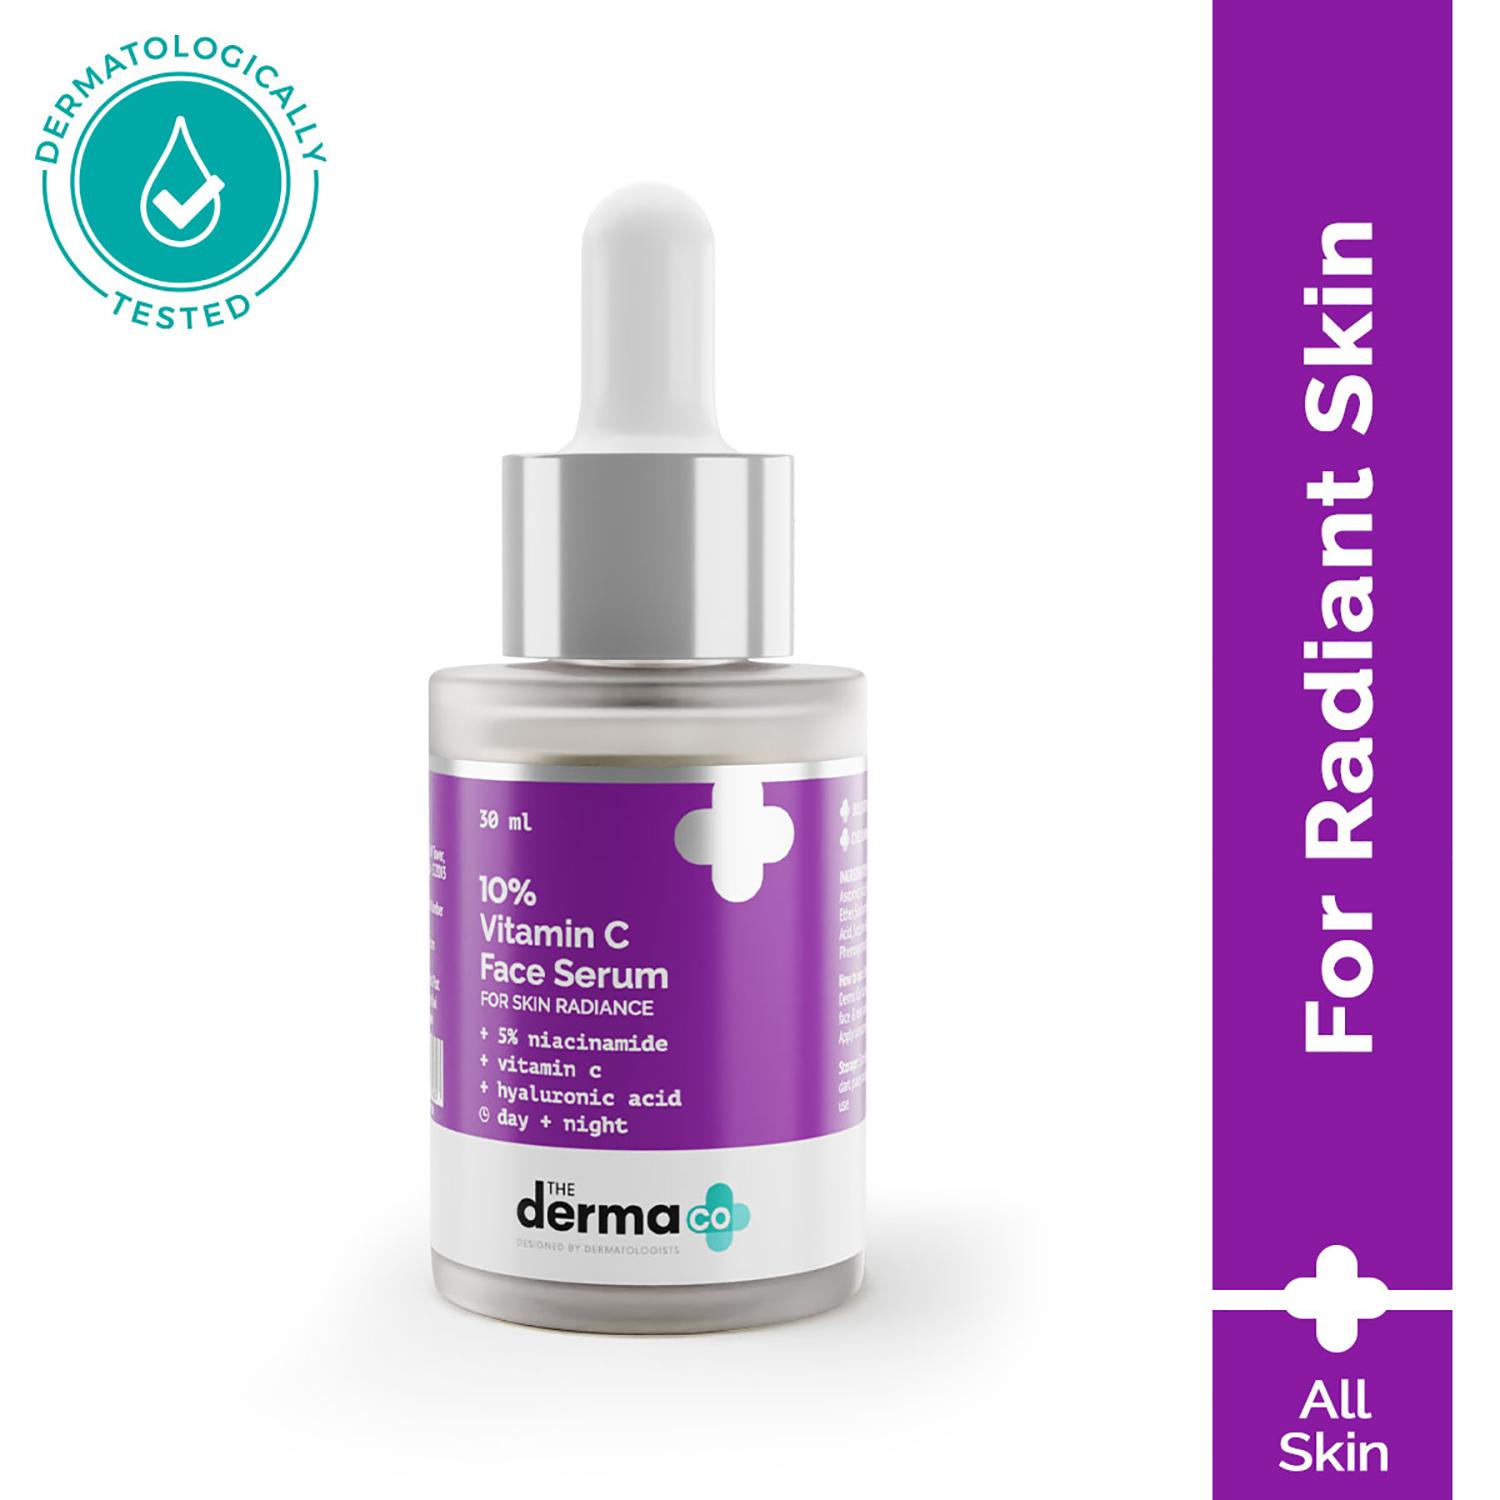 The Derma Co | The Derma Co 10% Vitamin C Face Serum (30ml)